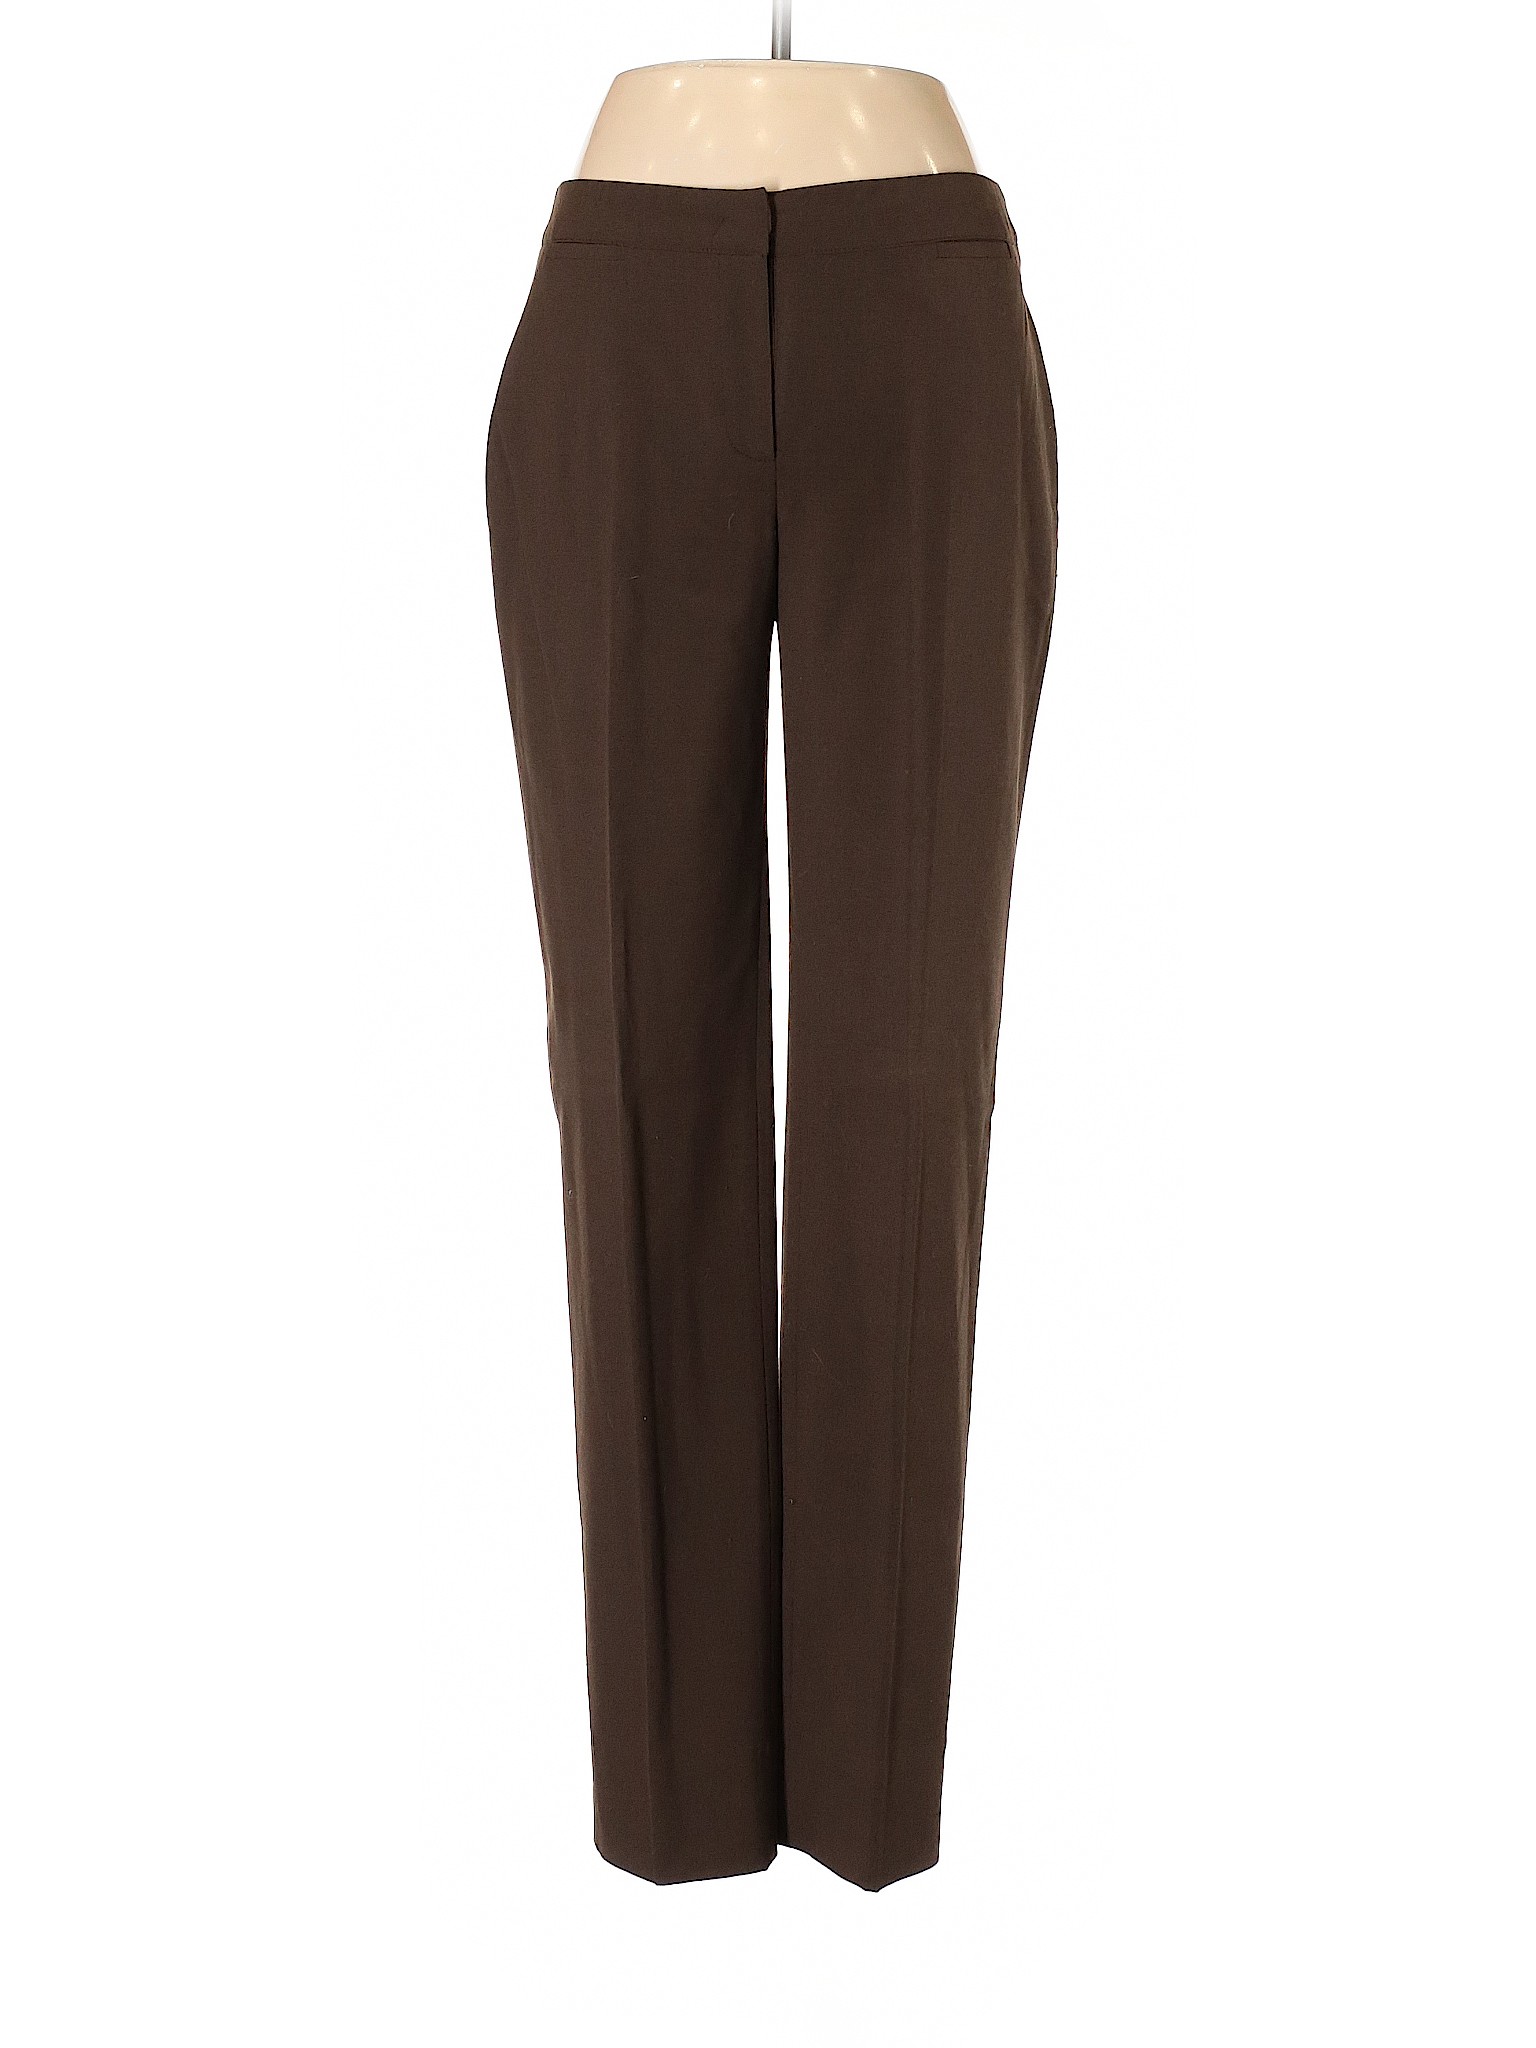 Thalian Women Brown Casual Pants 6 | eBay